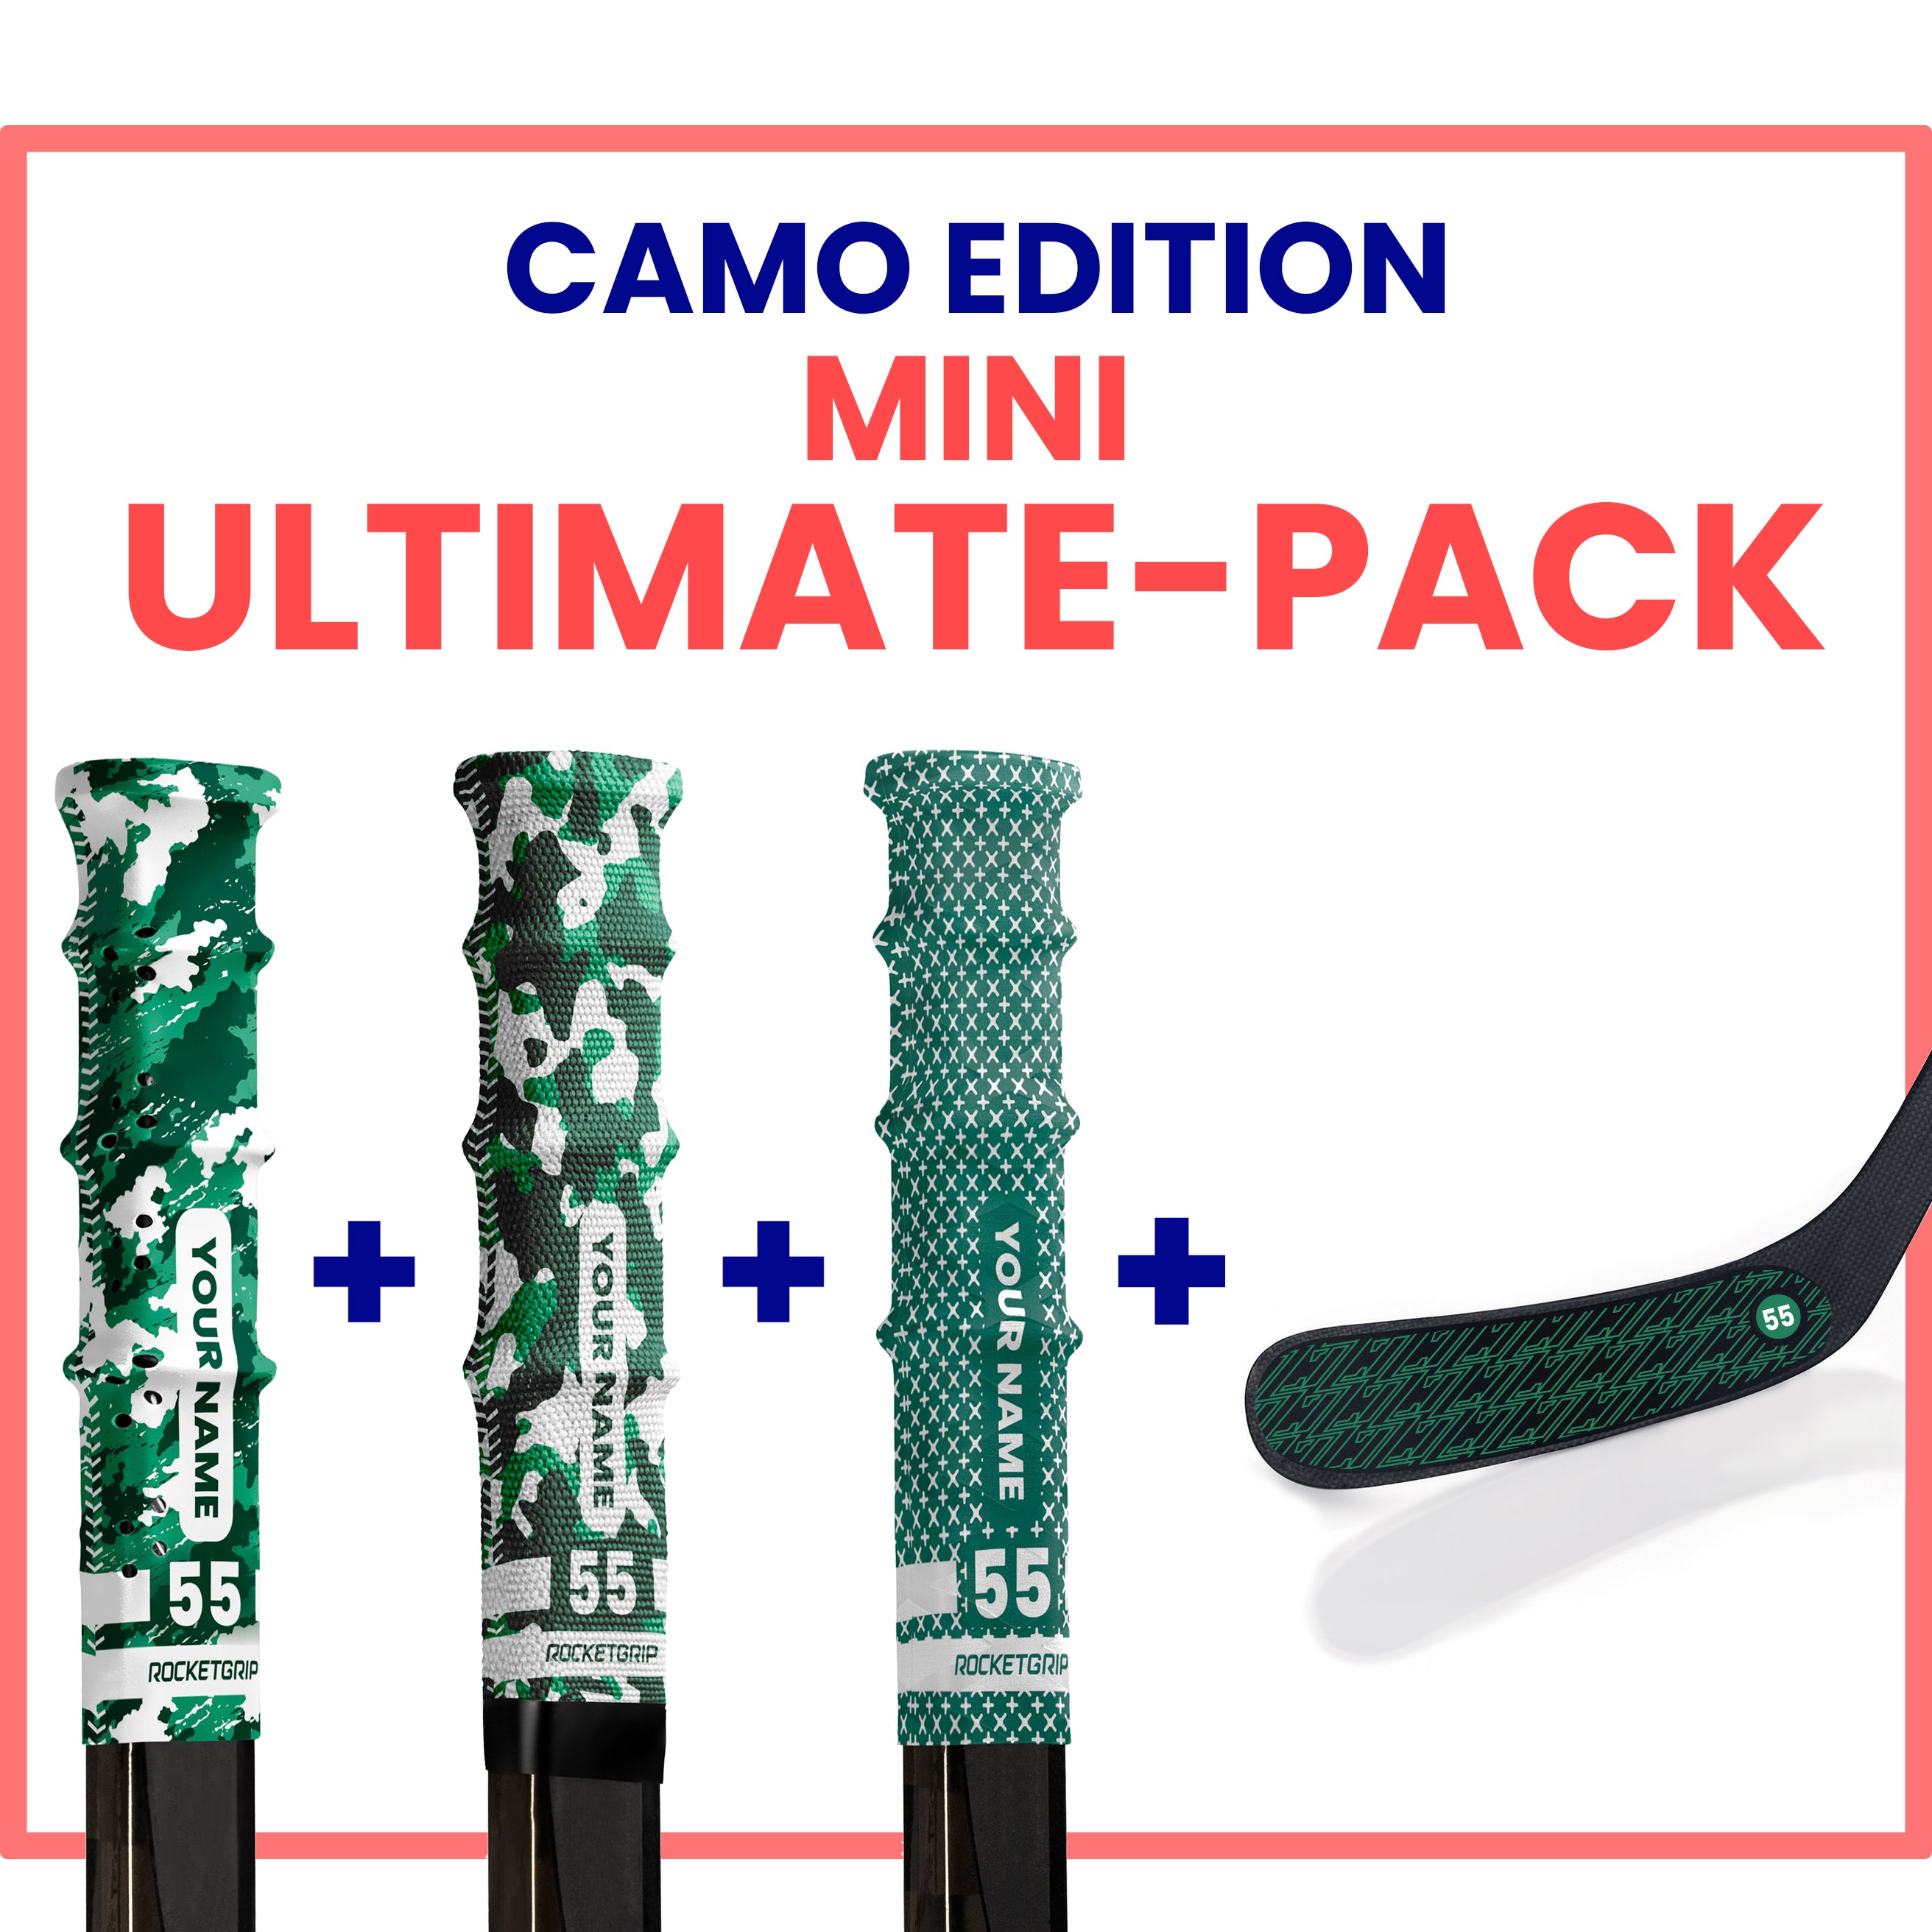 Mini Ultimate-Pack Camo Hockey Grips